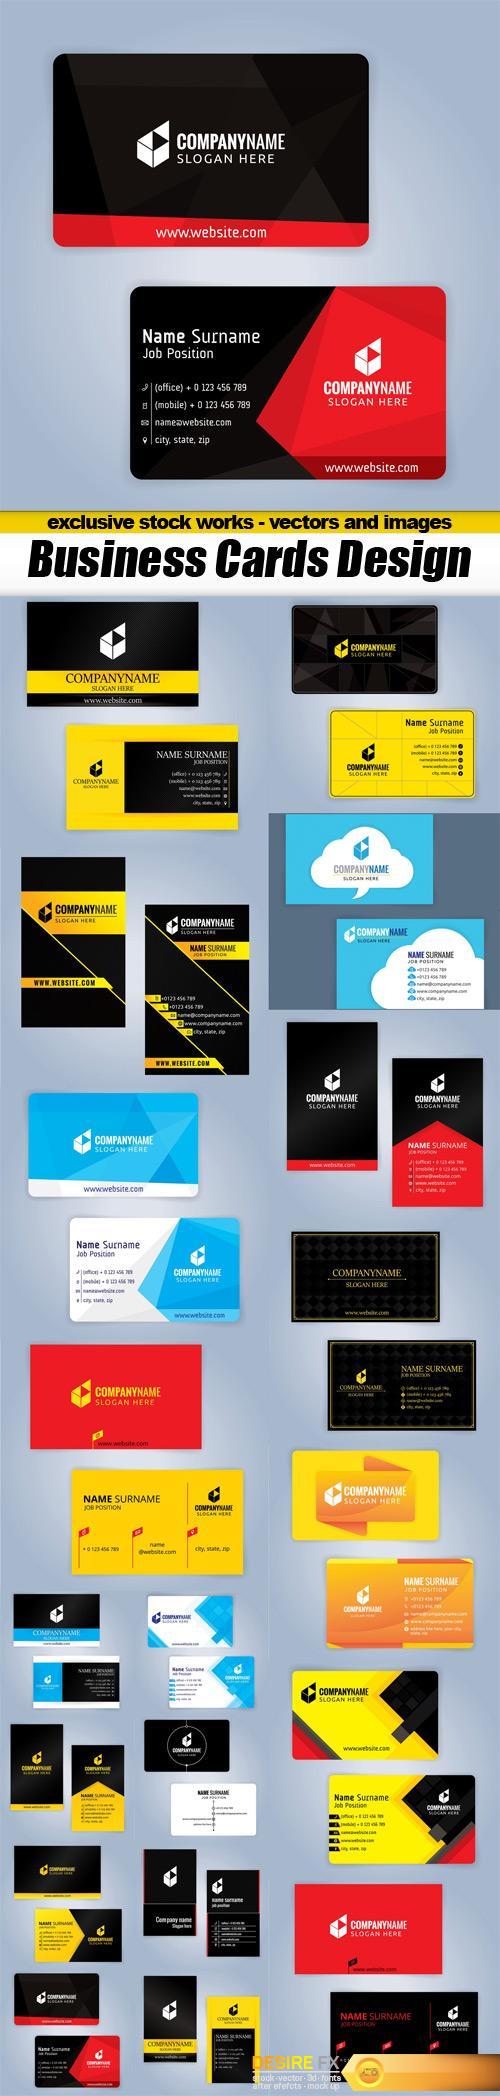 Business Cards Design - 20x EPS